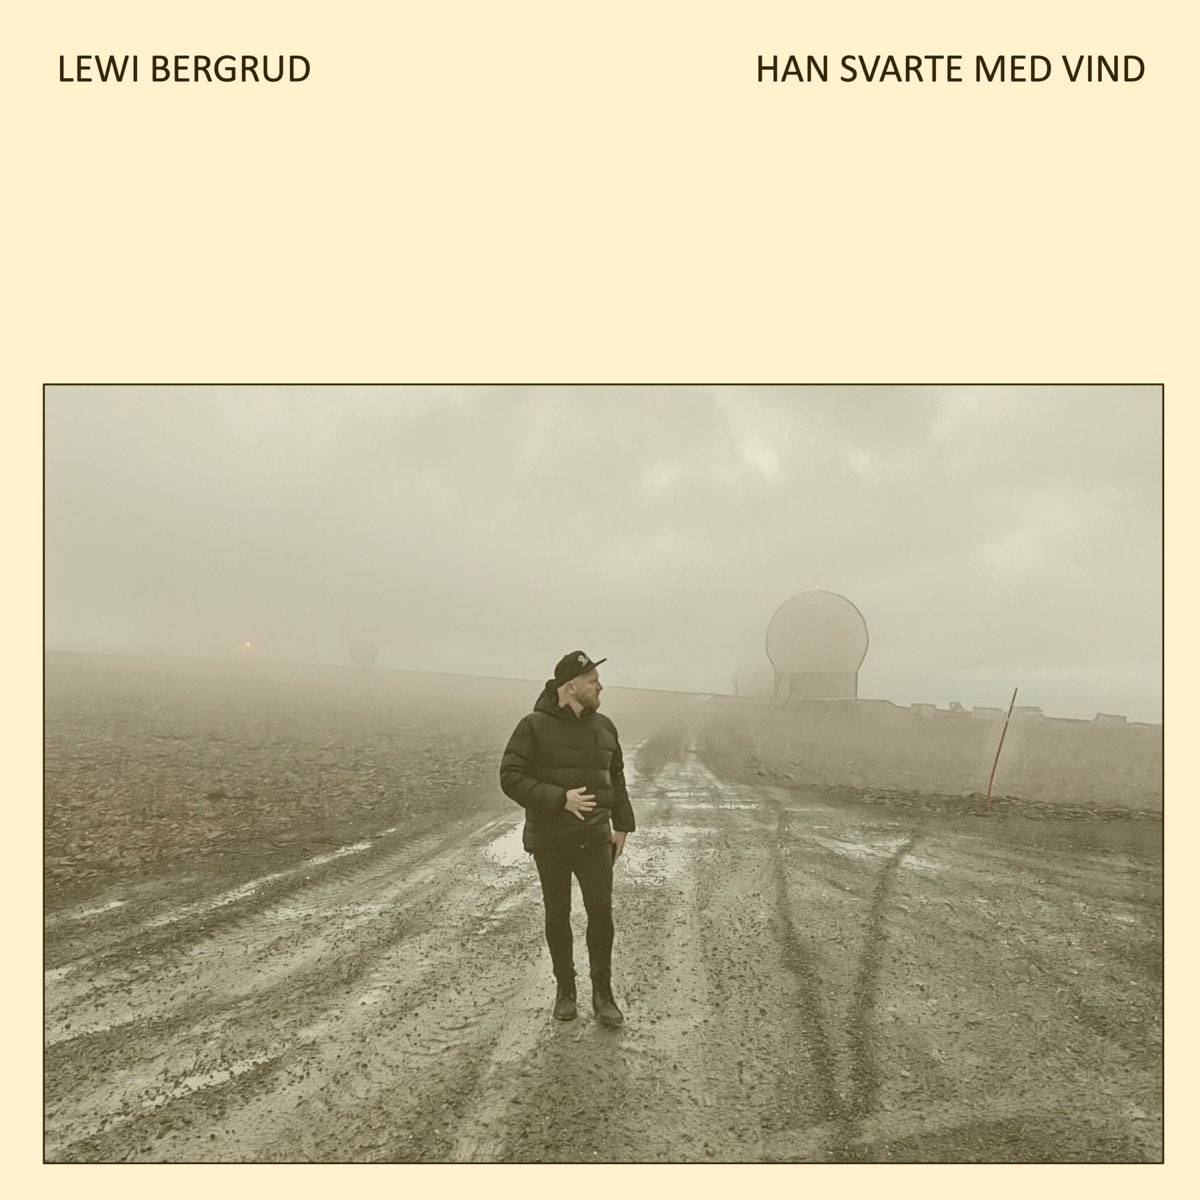 ‎Han svarte med vind - Single by Lewi Bergrud on Apple Music